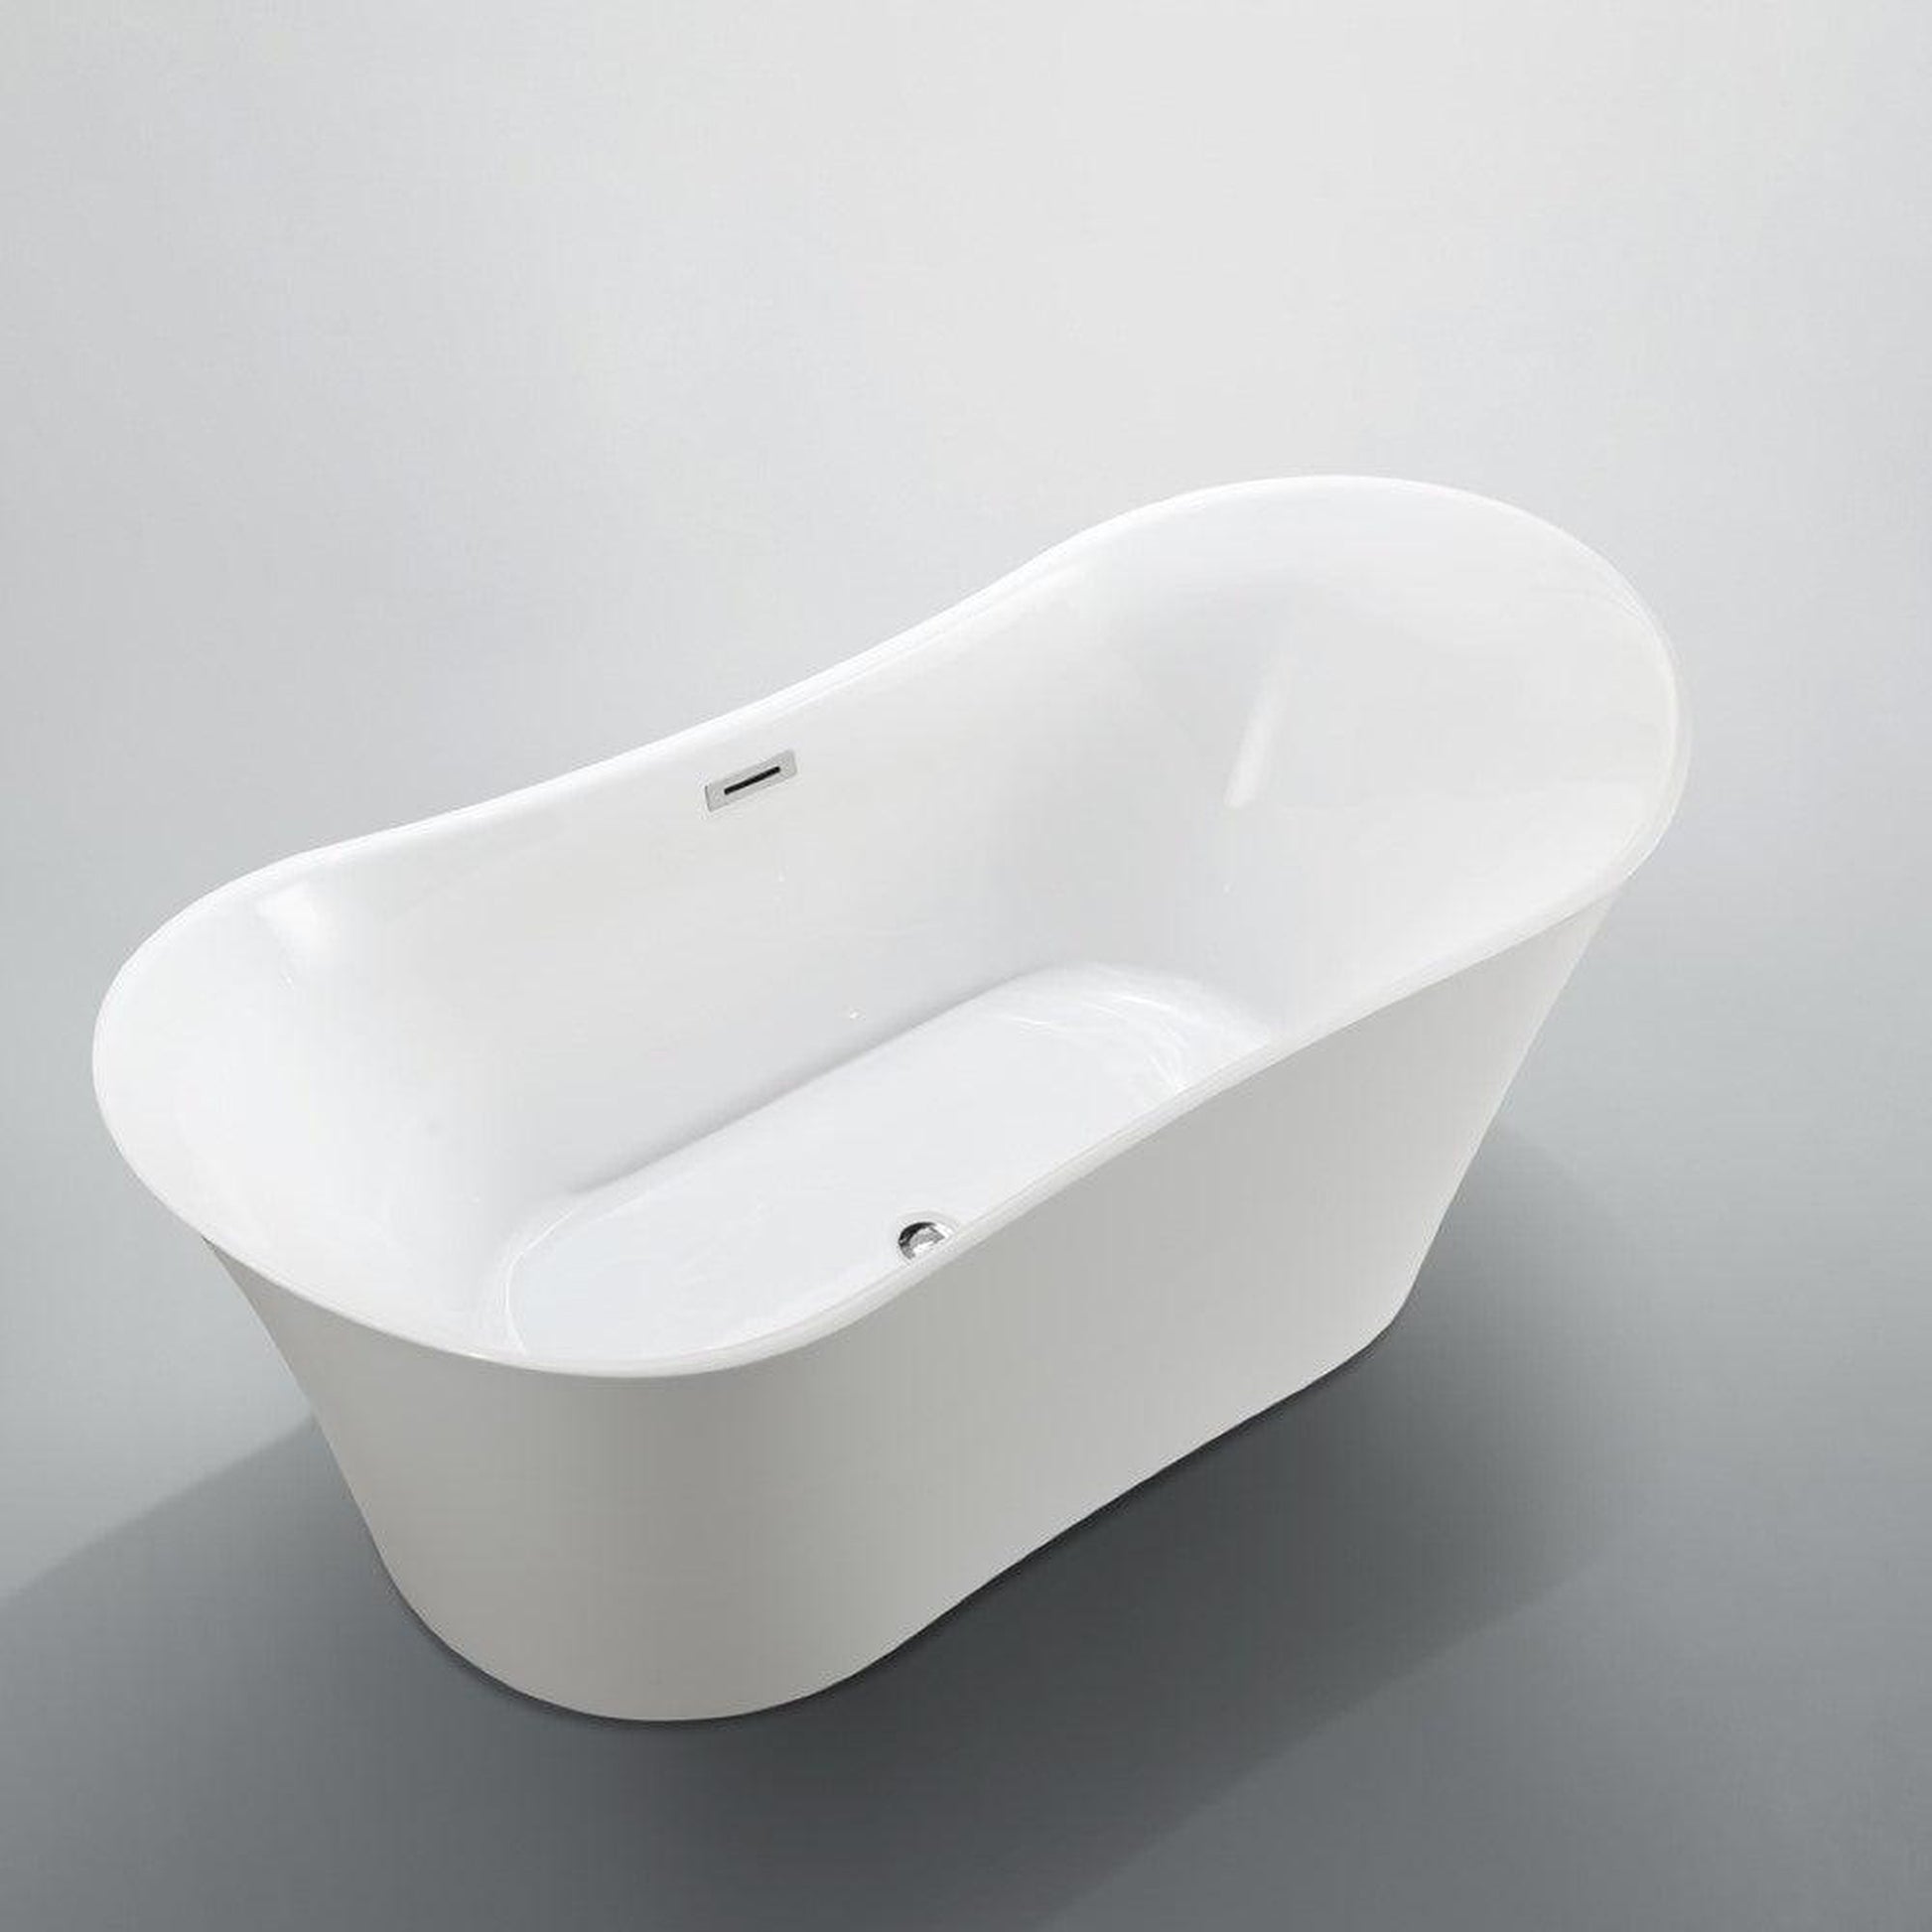 Bellaterra Home Bergamo 67" x 30" Glossy White Oval Acrylic Freestanding Double Slipper Soaking Bathtub